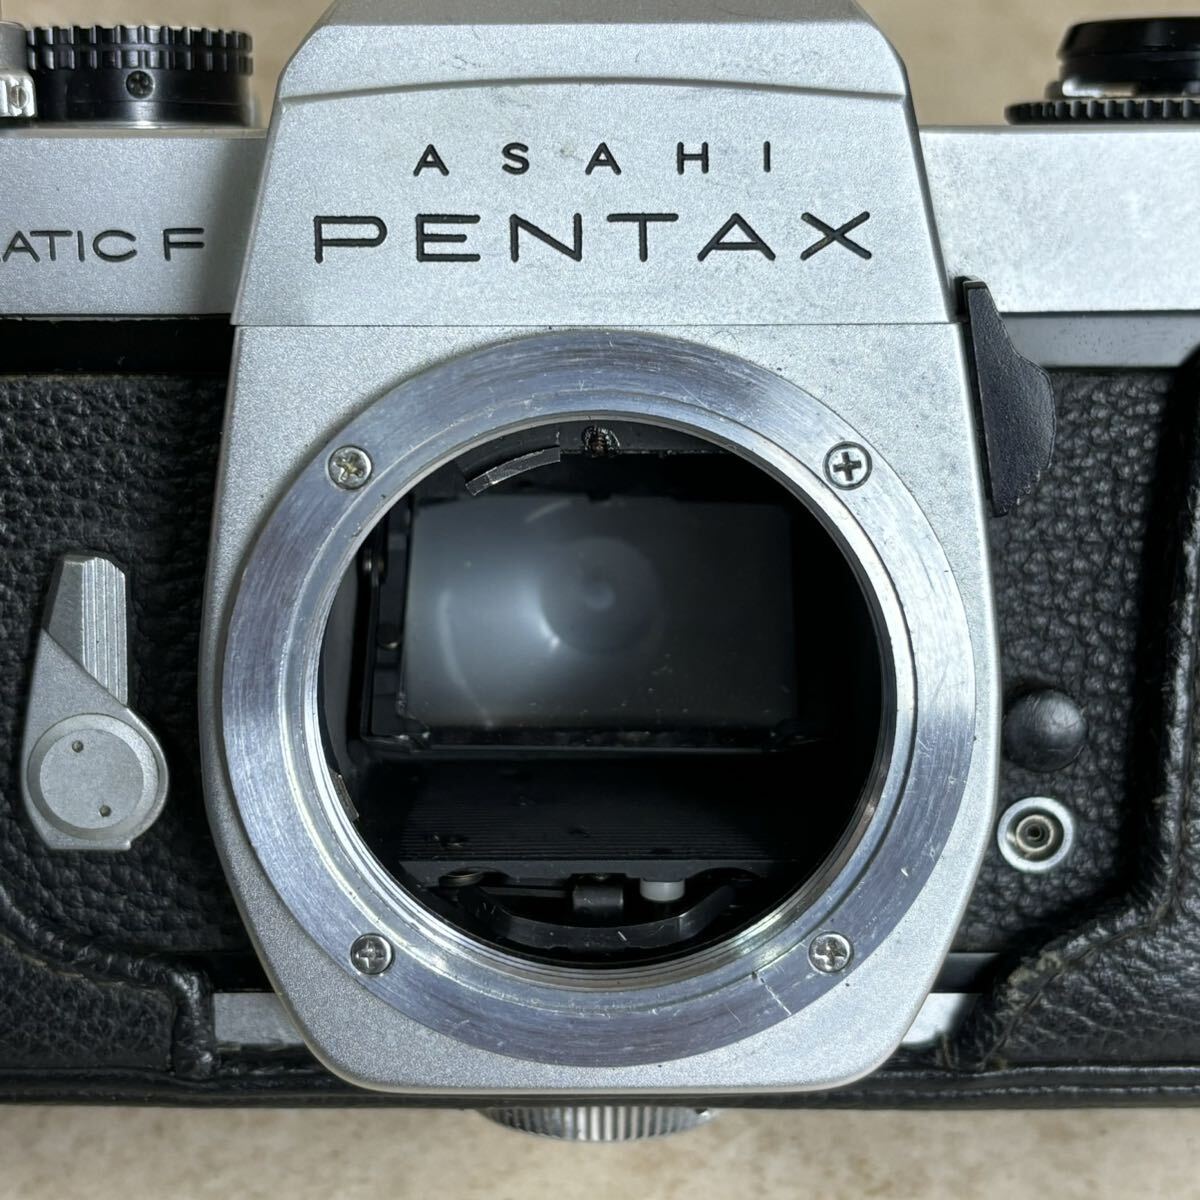 s0516602 ASAHI PENTAX アサヒ ペンタックス SPOTMATICF フィルムカメラ カメラ 撮影 レトロ レンズなし ボディ 中古品_画像2